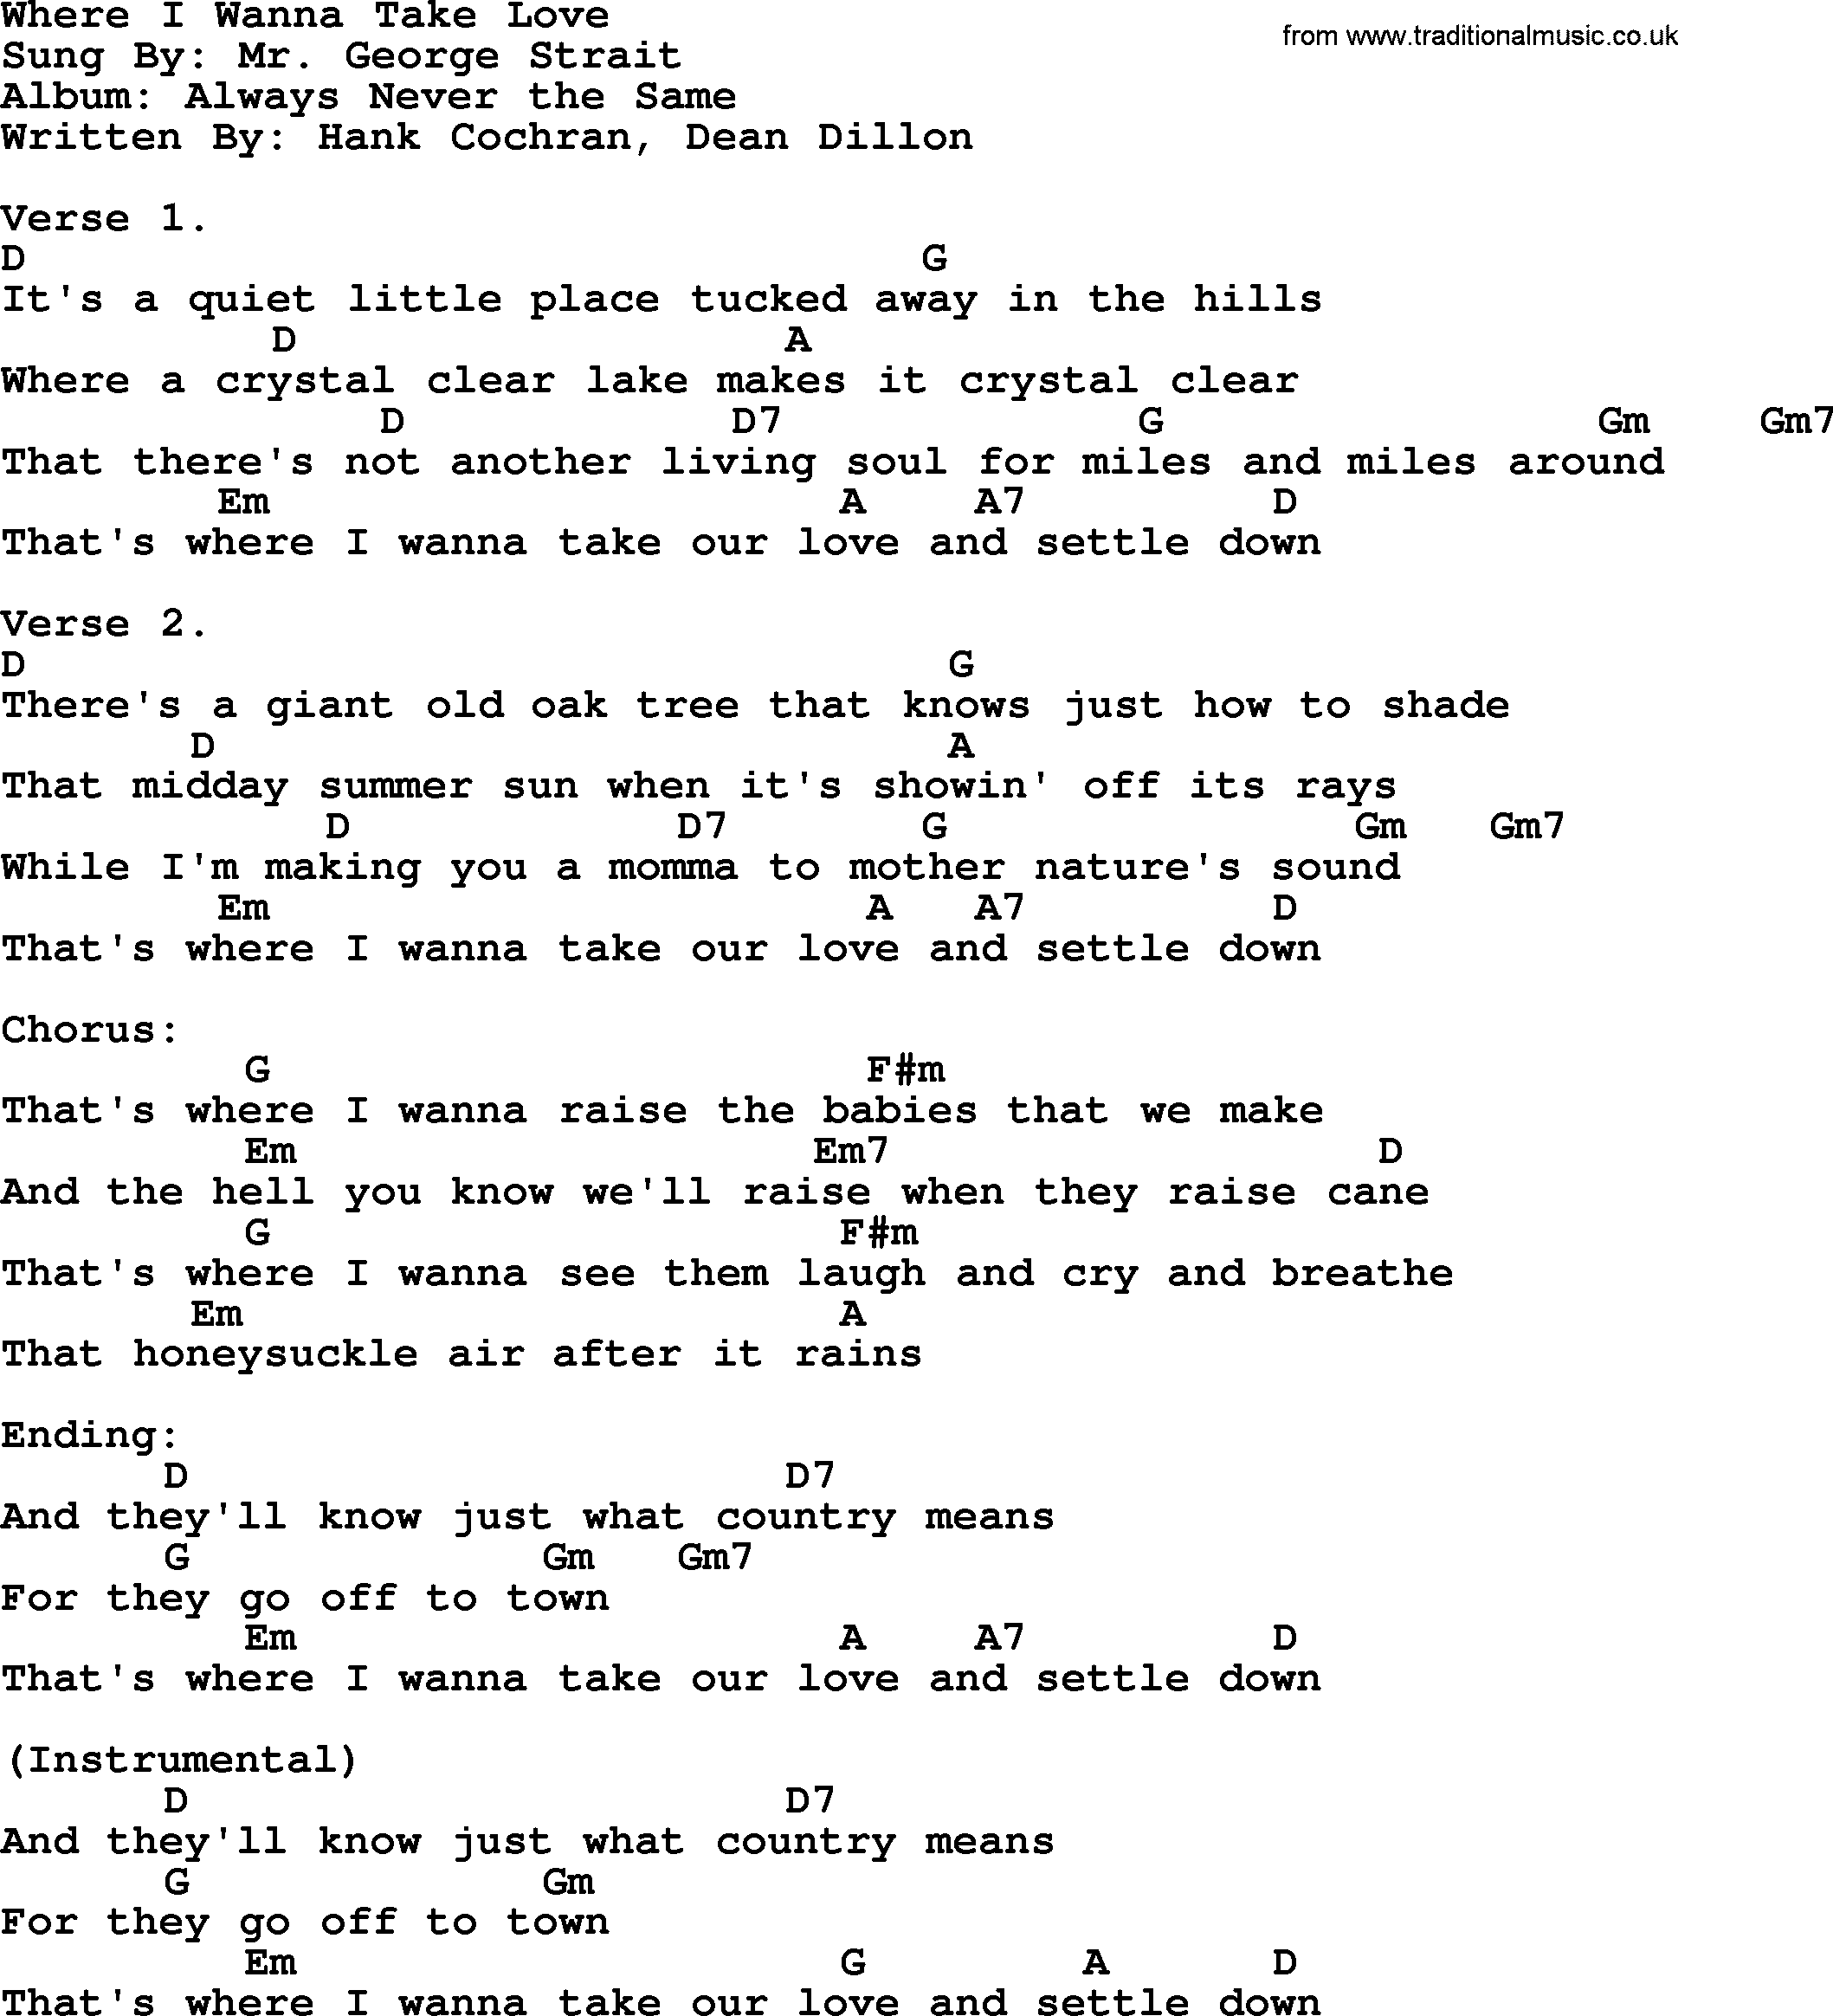 George Strait song: Where I Wanna Take Love, lyrics and chords